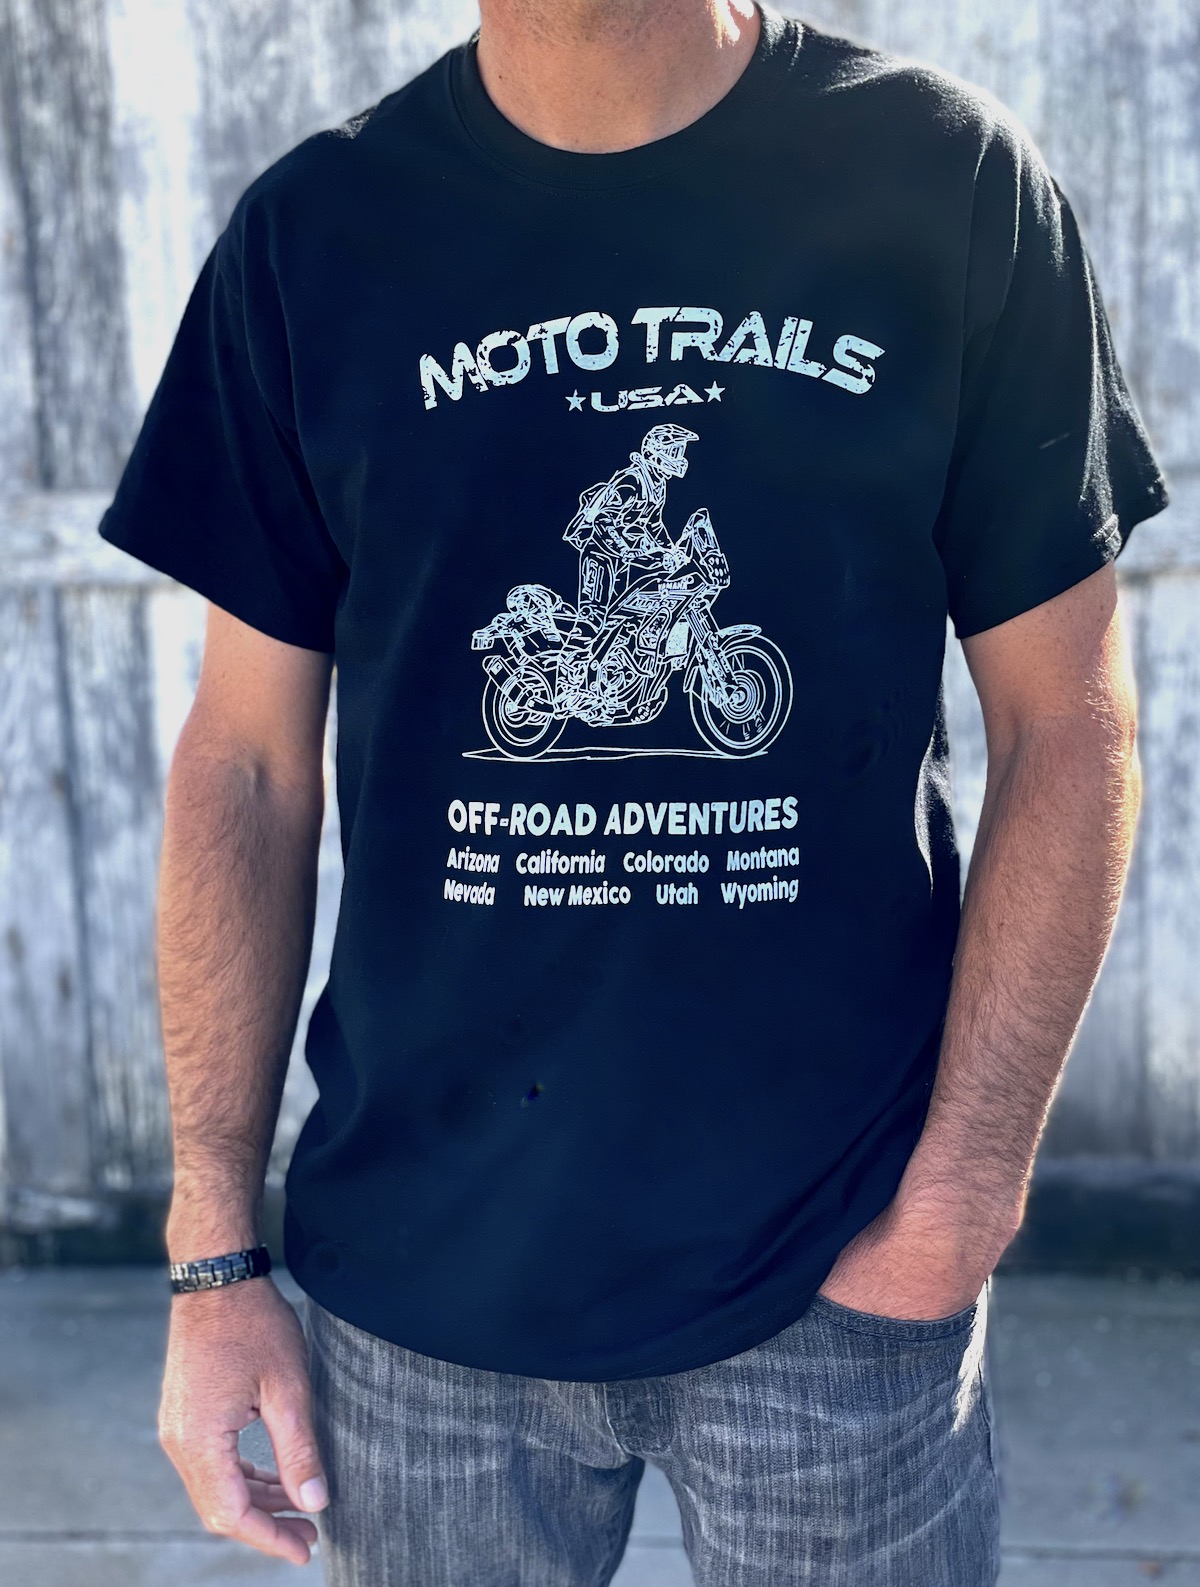 Black T-shirt Moto Trails USA Tenere 700